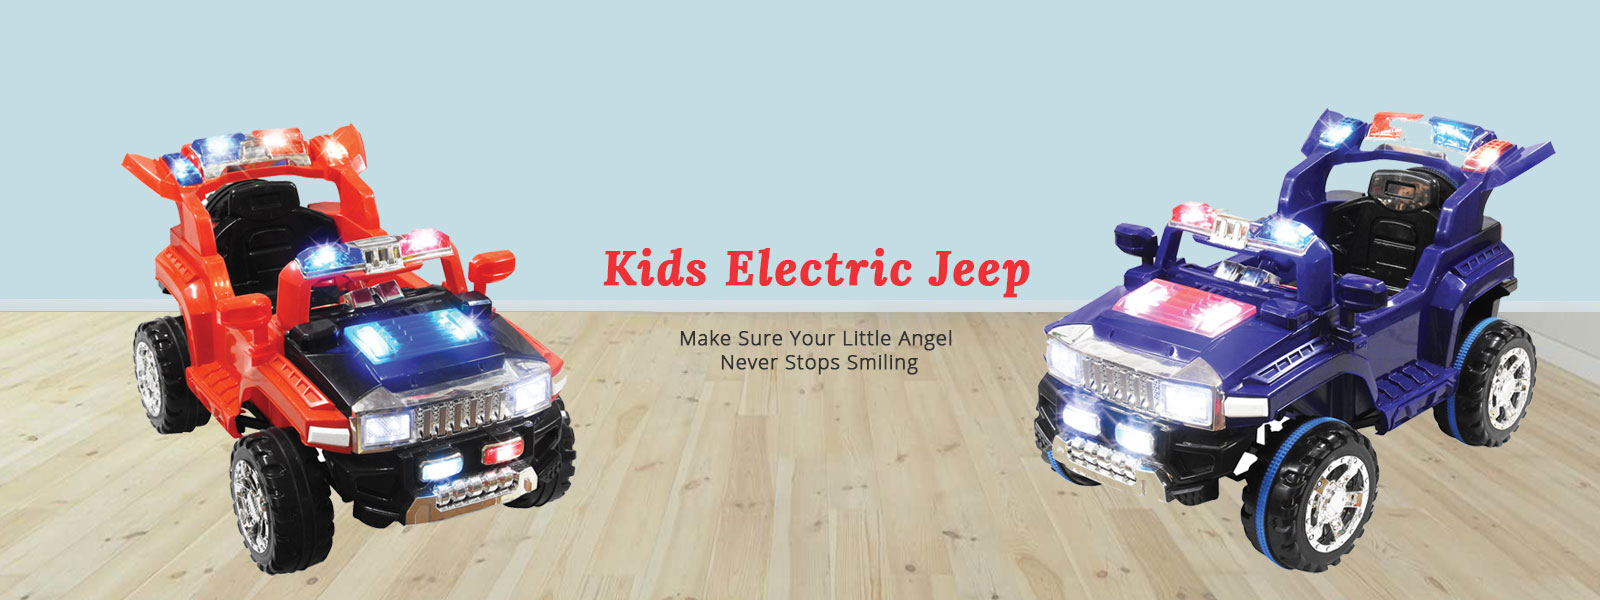 Kids Electric Jeep Manufacturers in Thiruvananthapuram